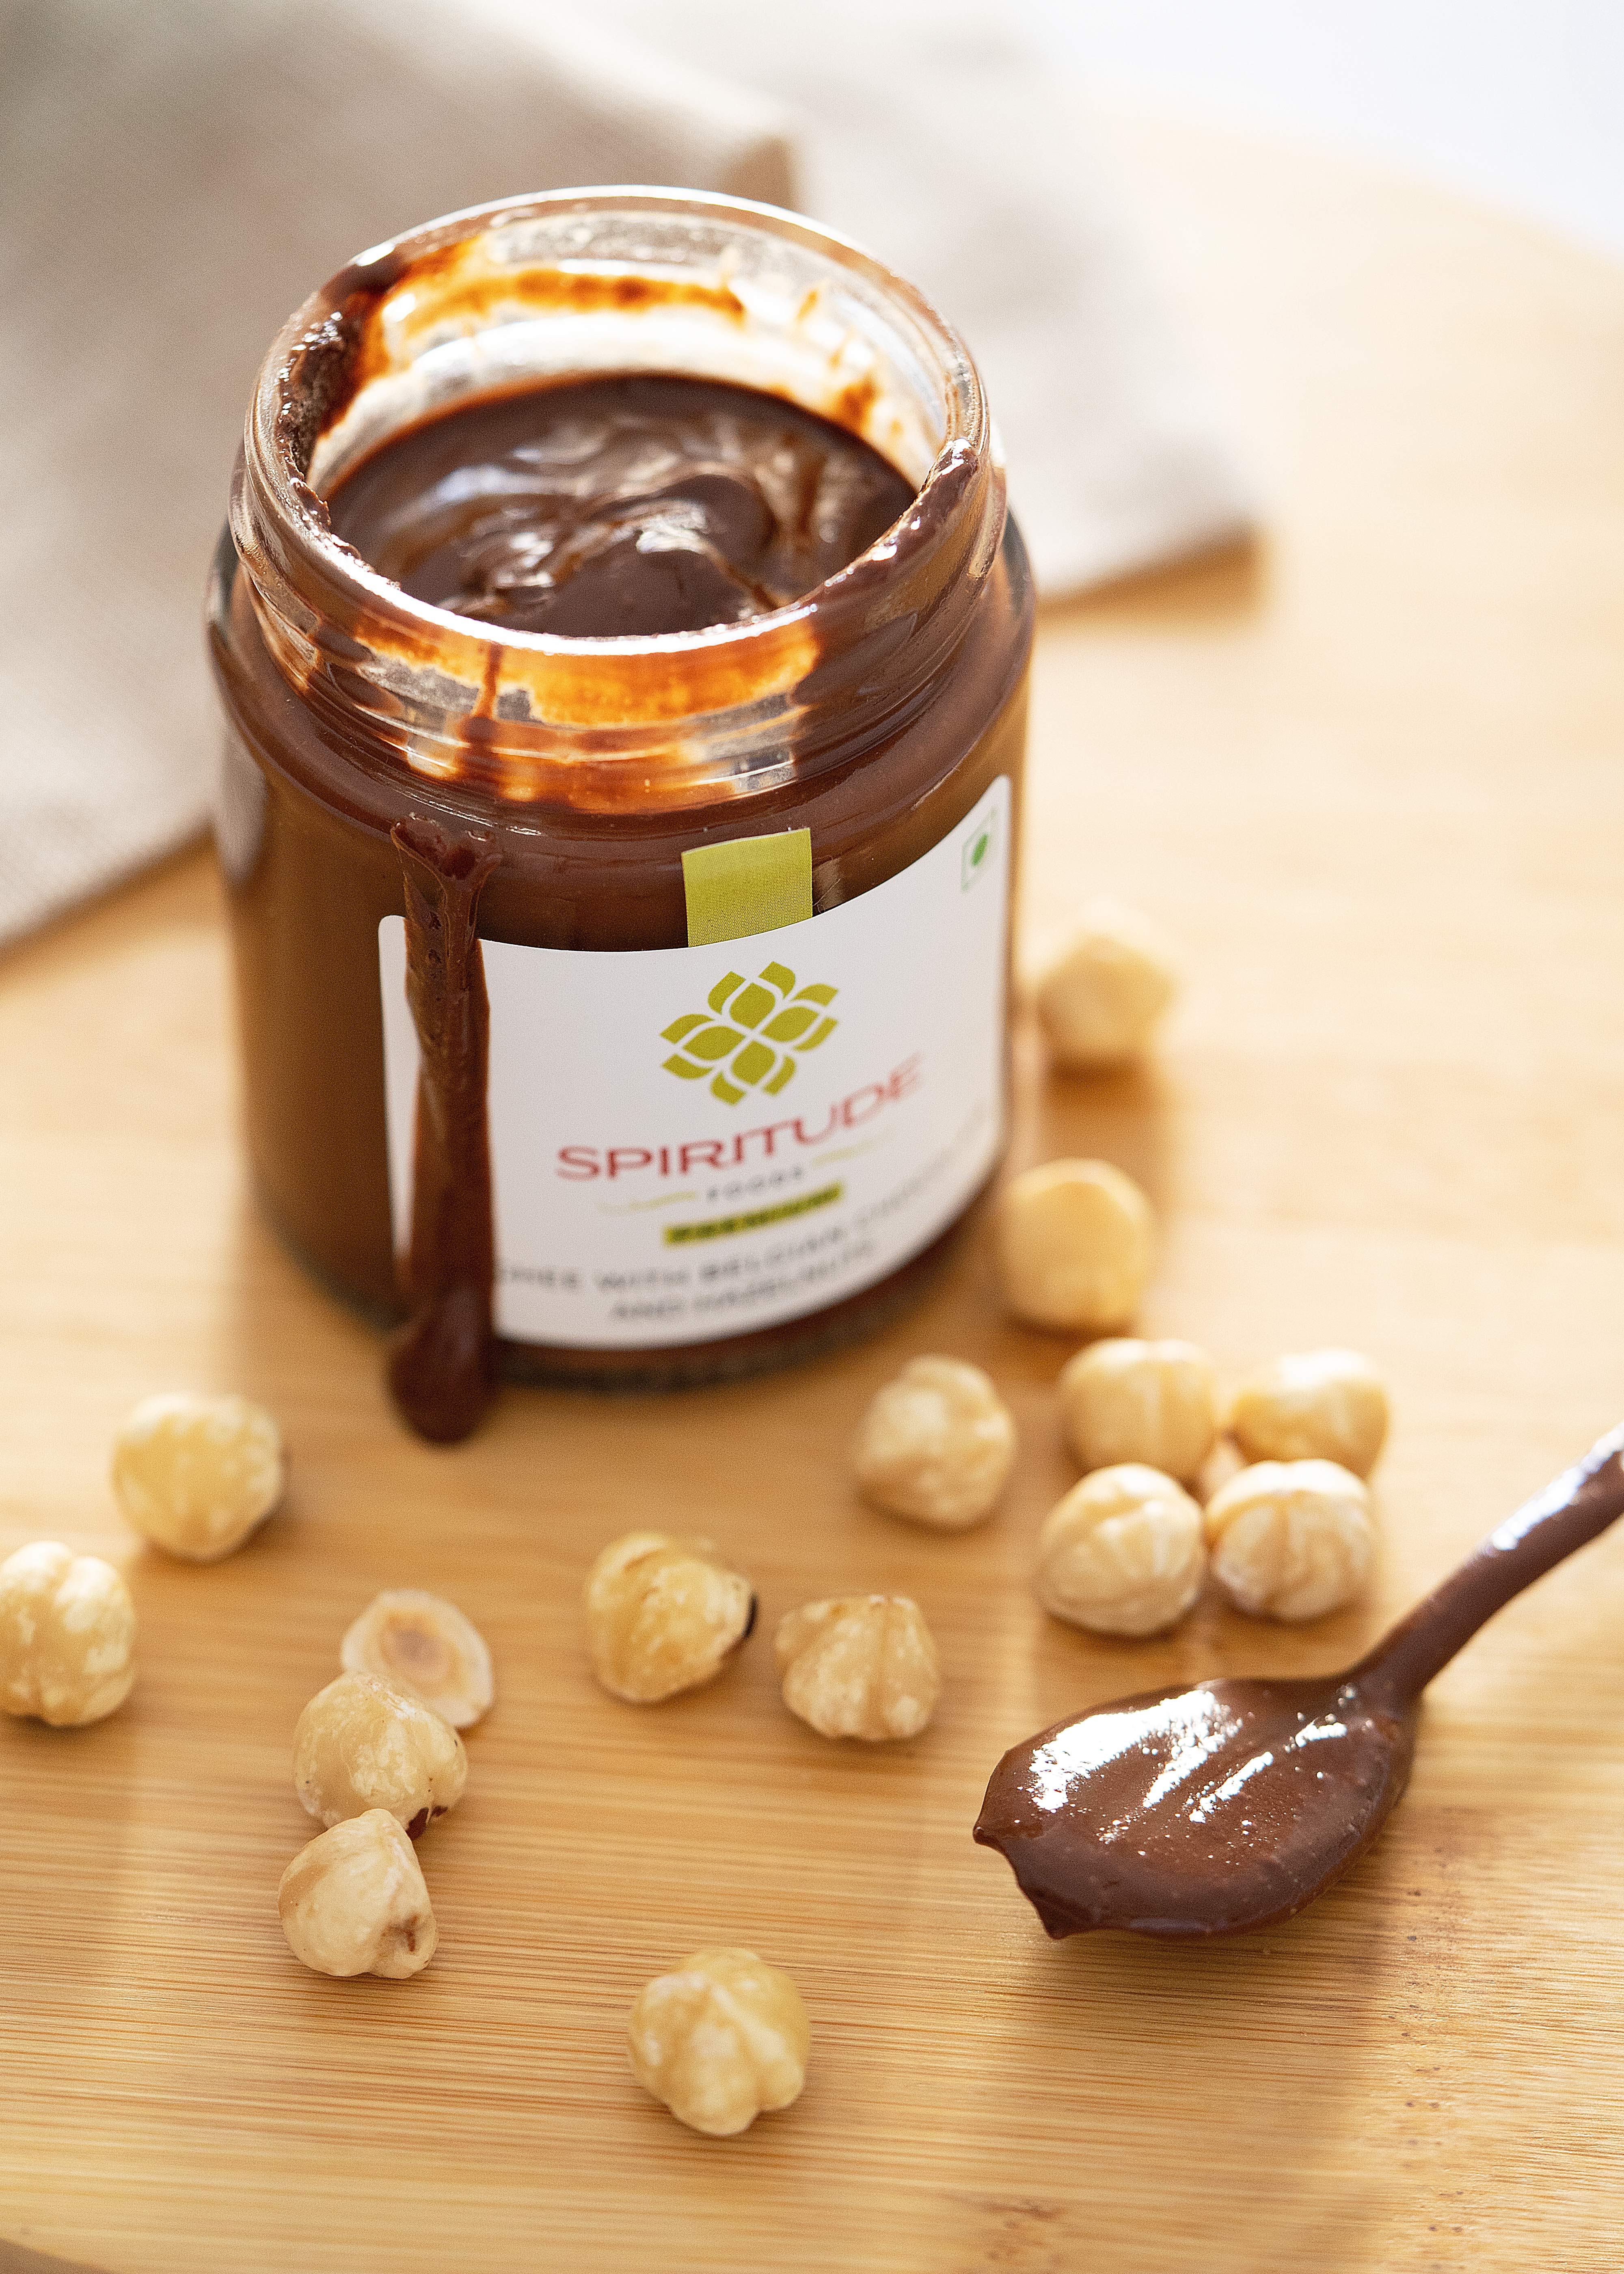 Spiritude Premium Chocolate Hazelnut Spread